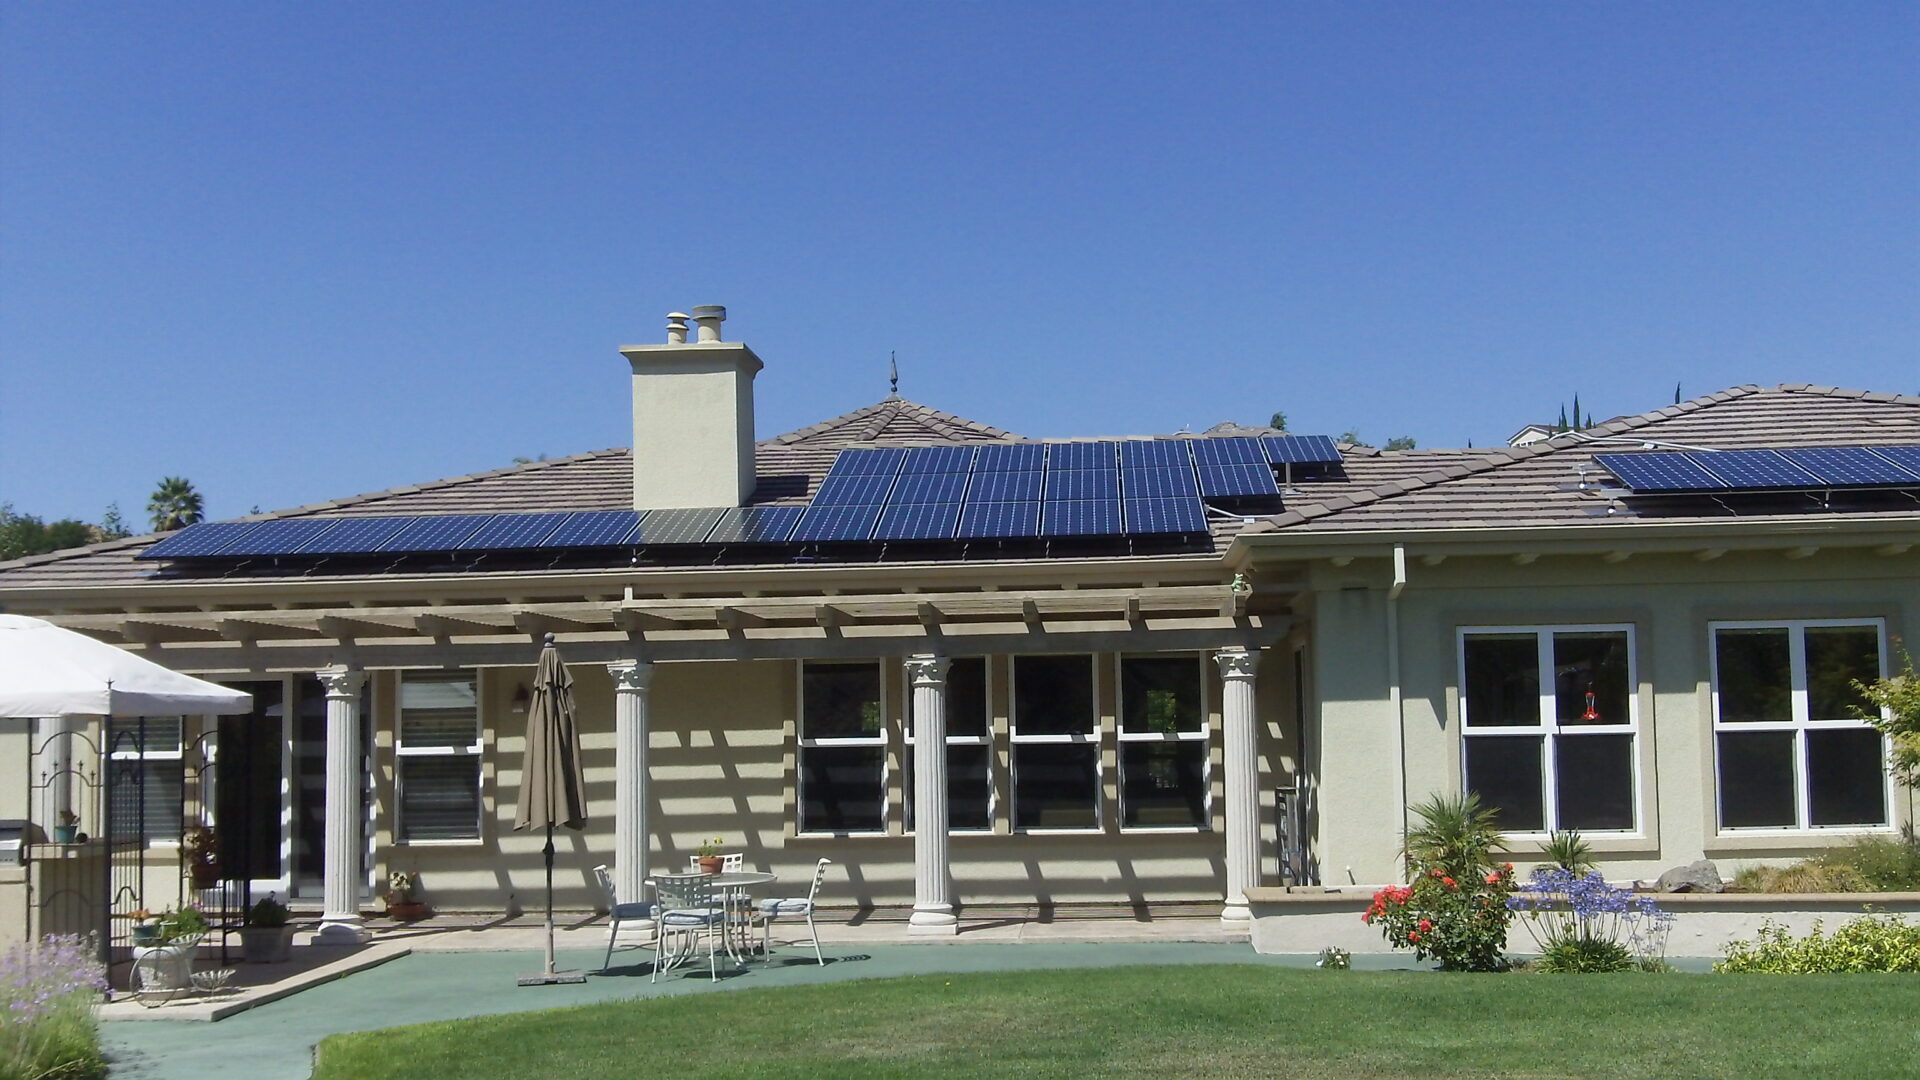 California Solar Panel House